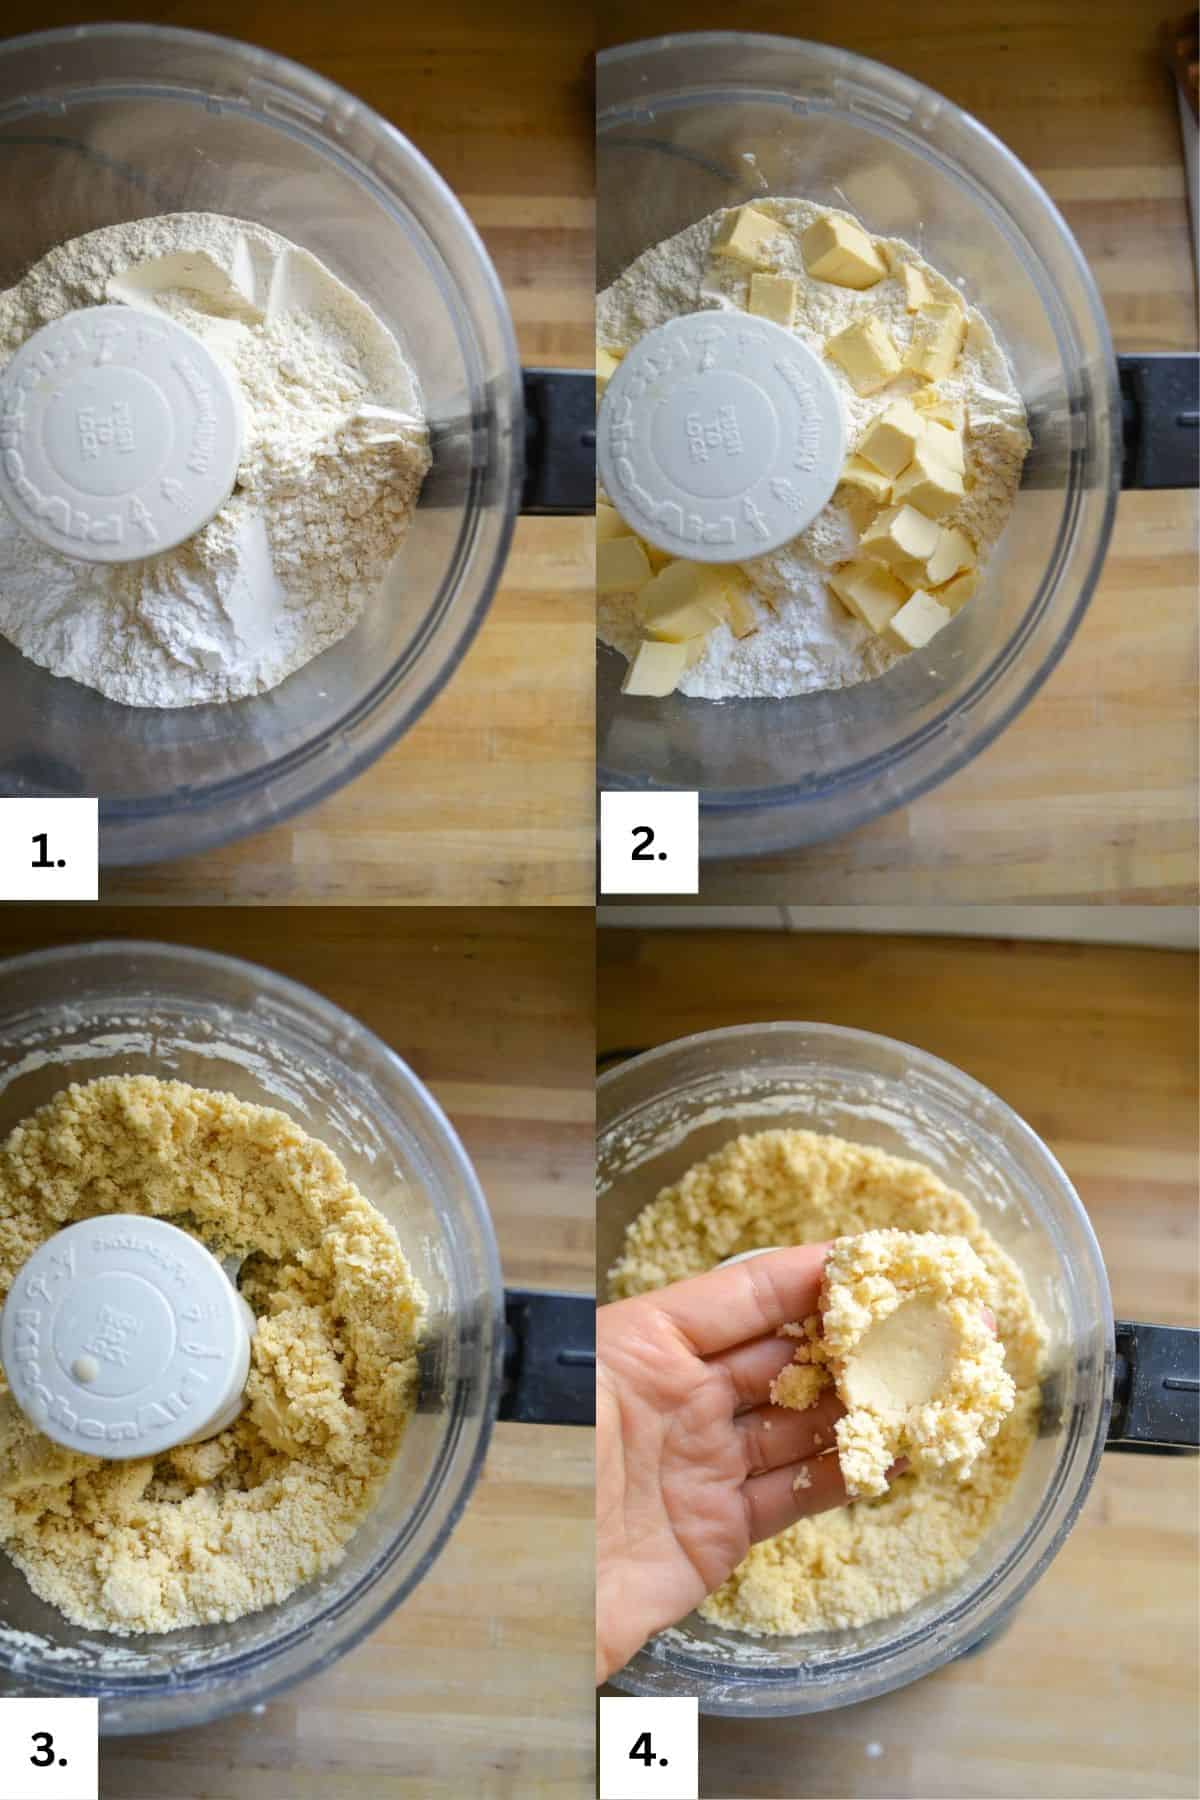 Step-by-step photos of making the vegan tart crust.